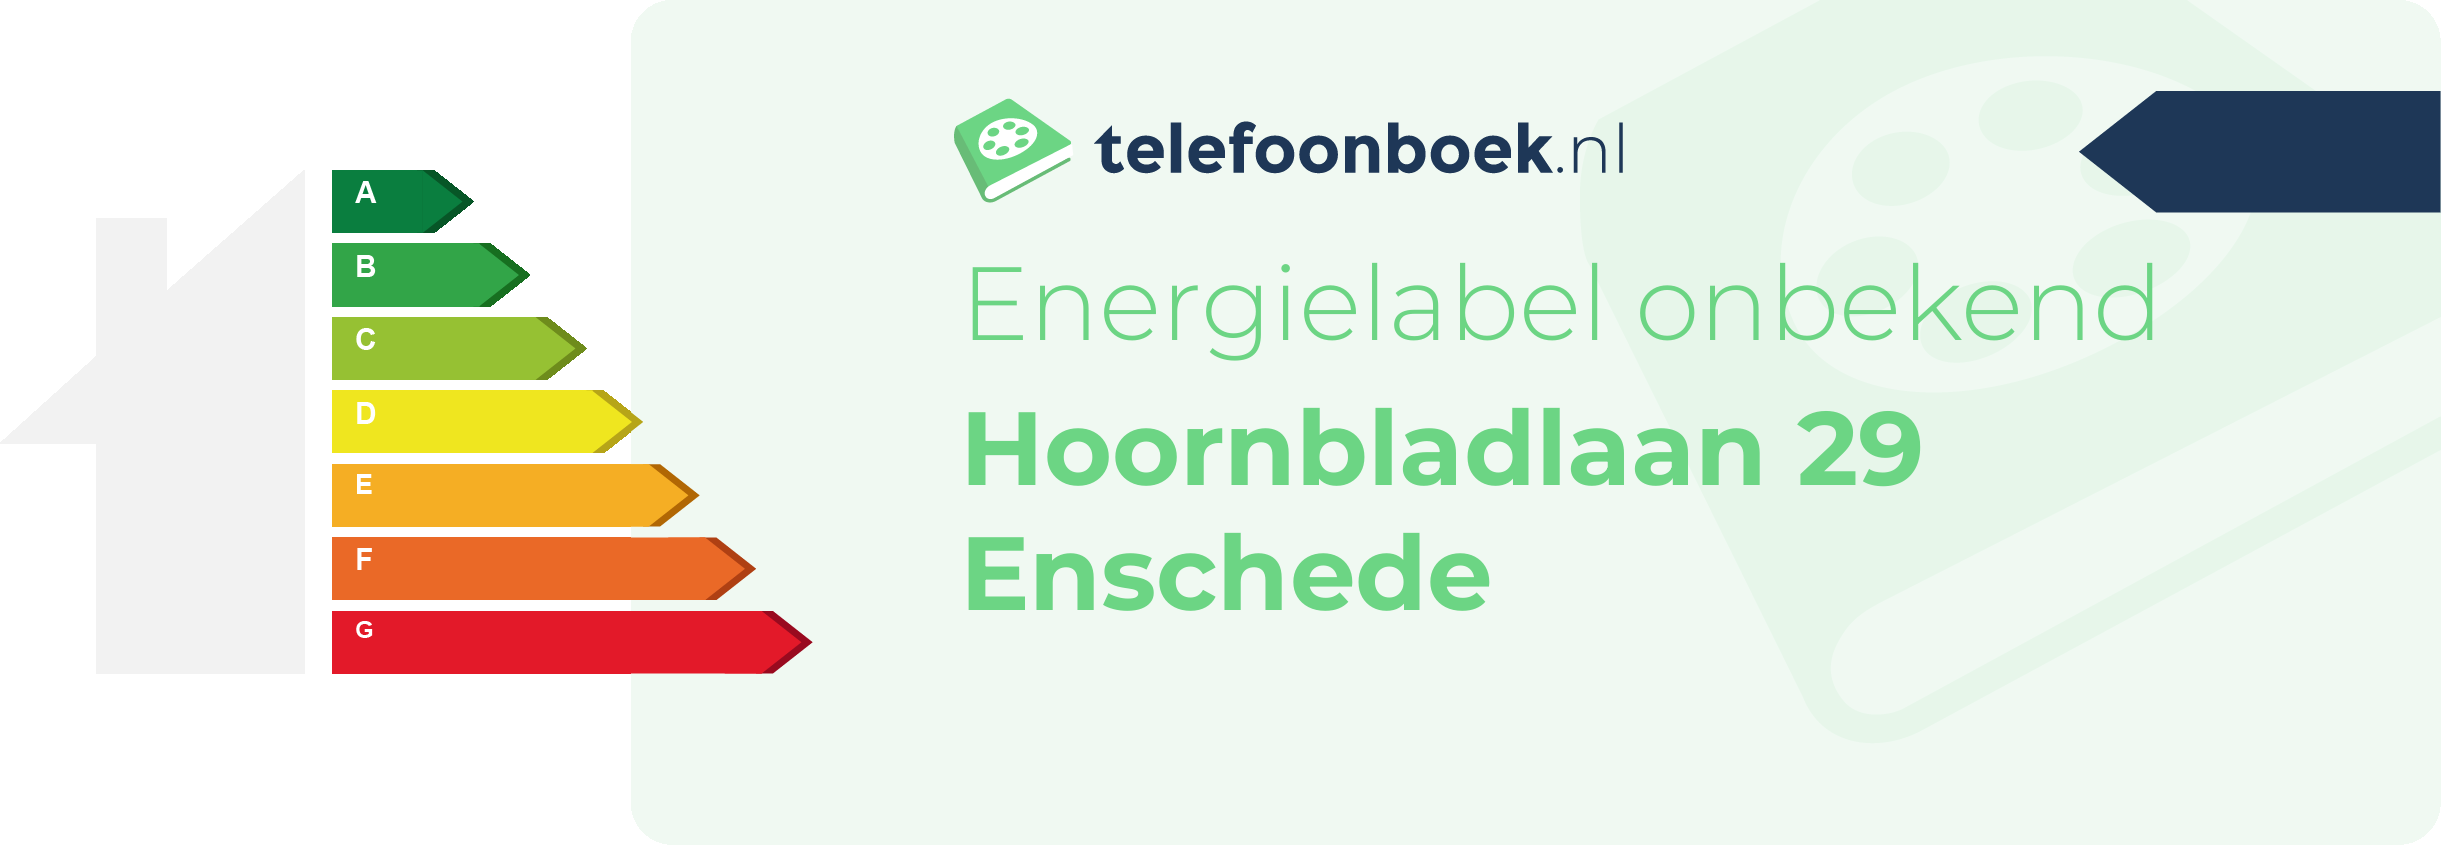 Energielabel Hoornbladlaan 29 Enschede